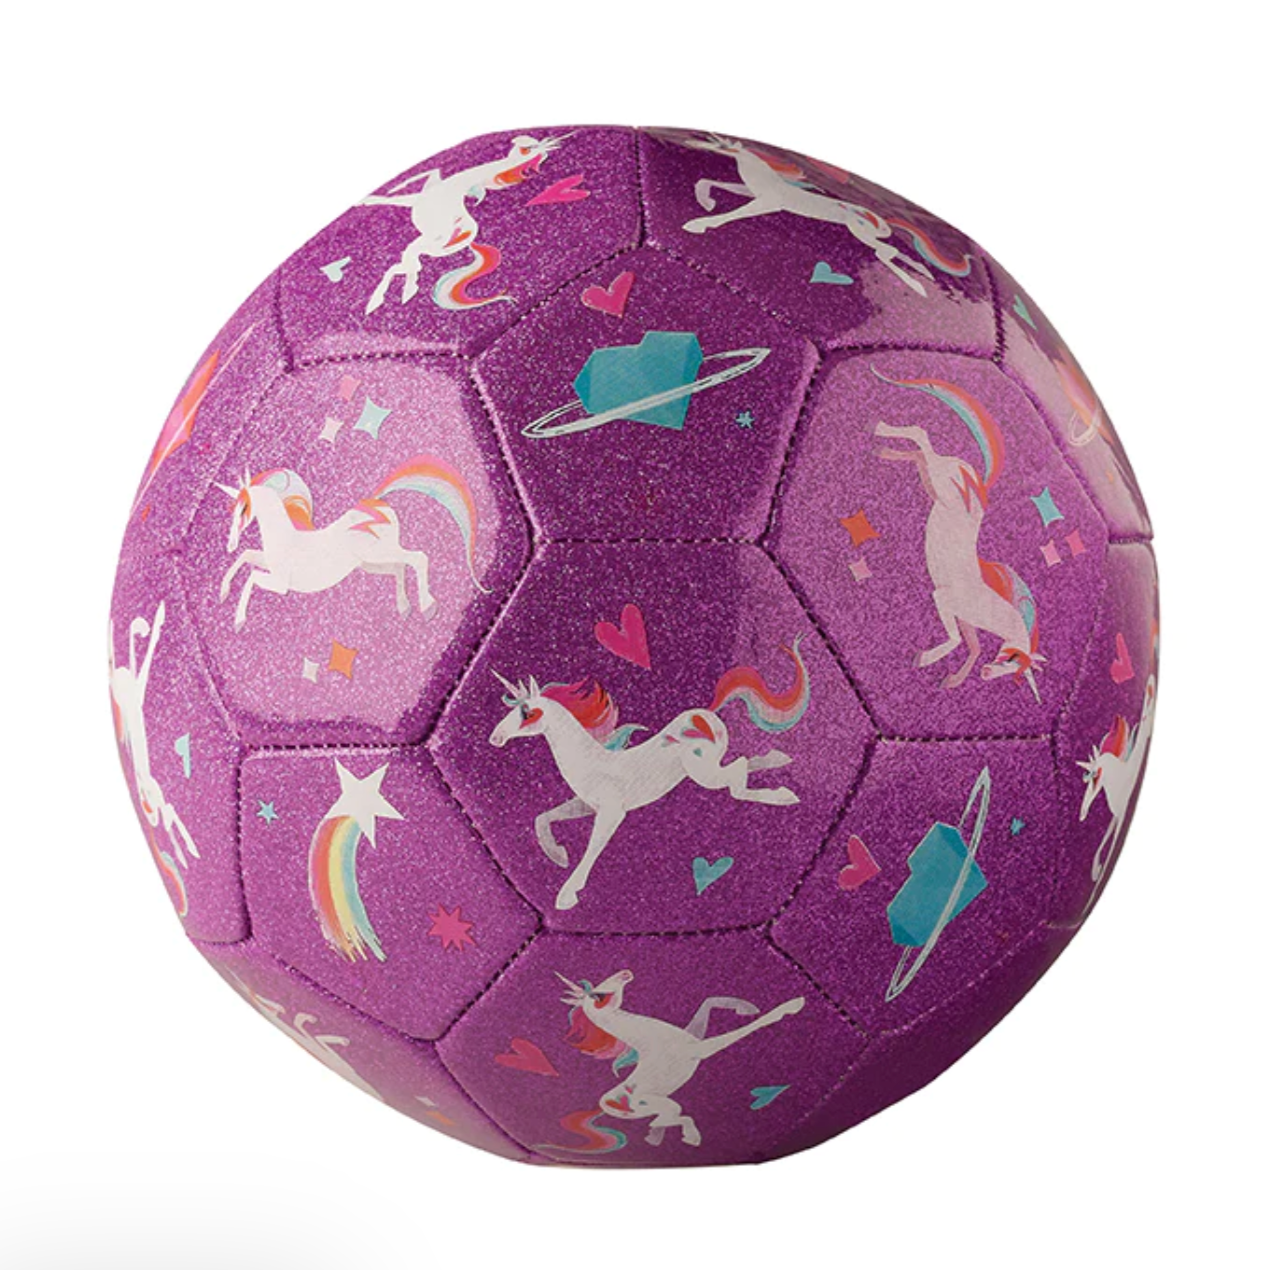 Glitter Soccer Ball - Unicorn Galaxy